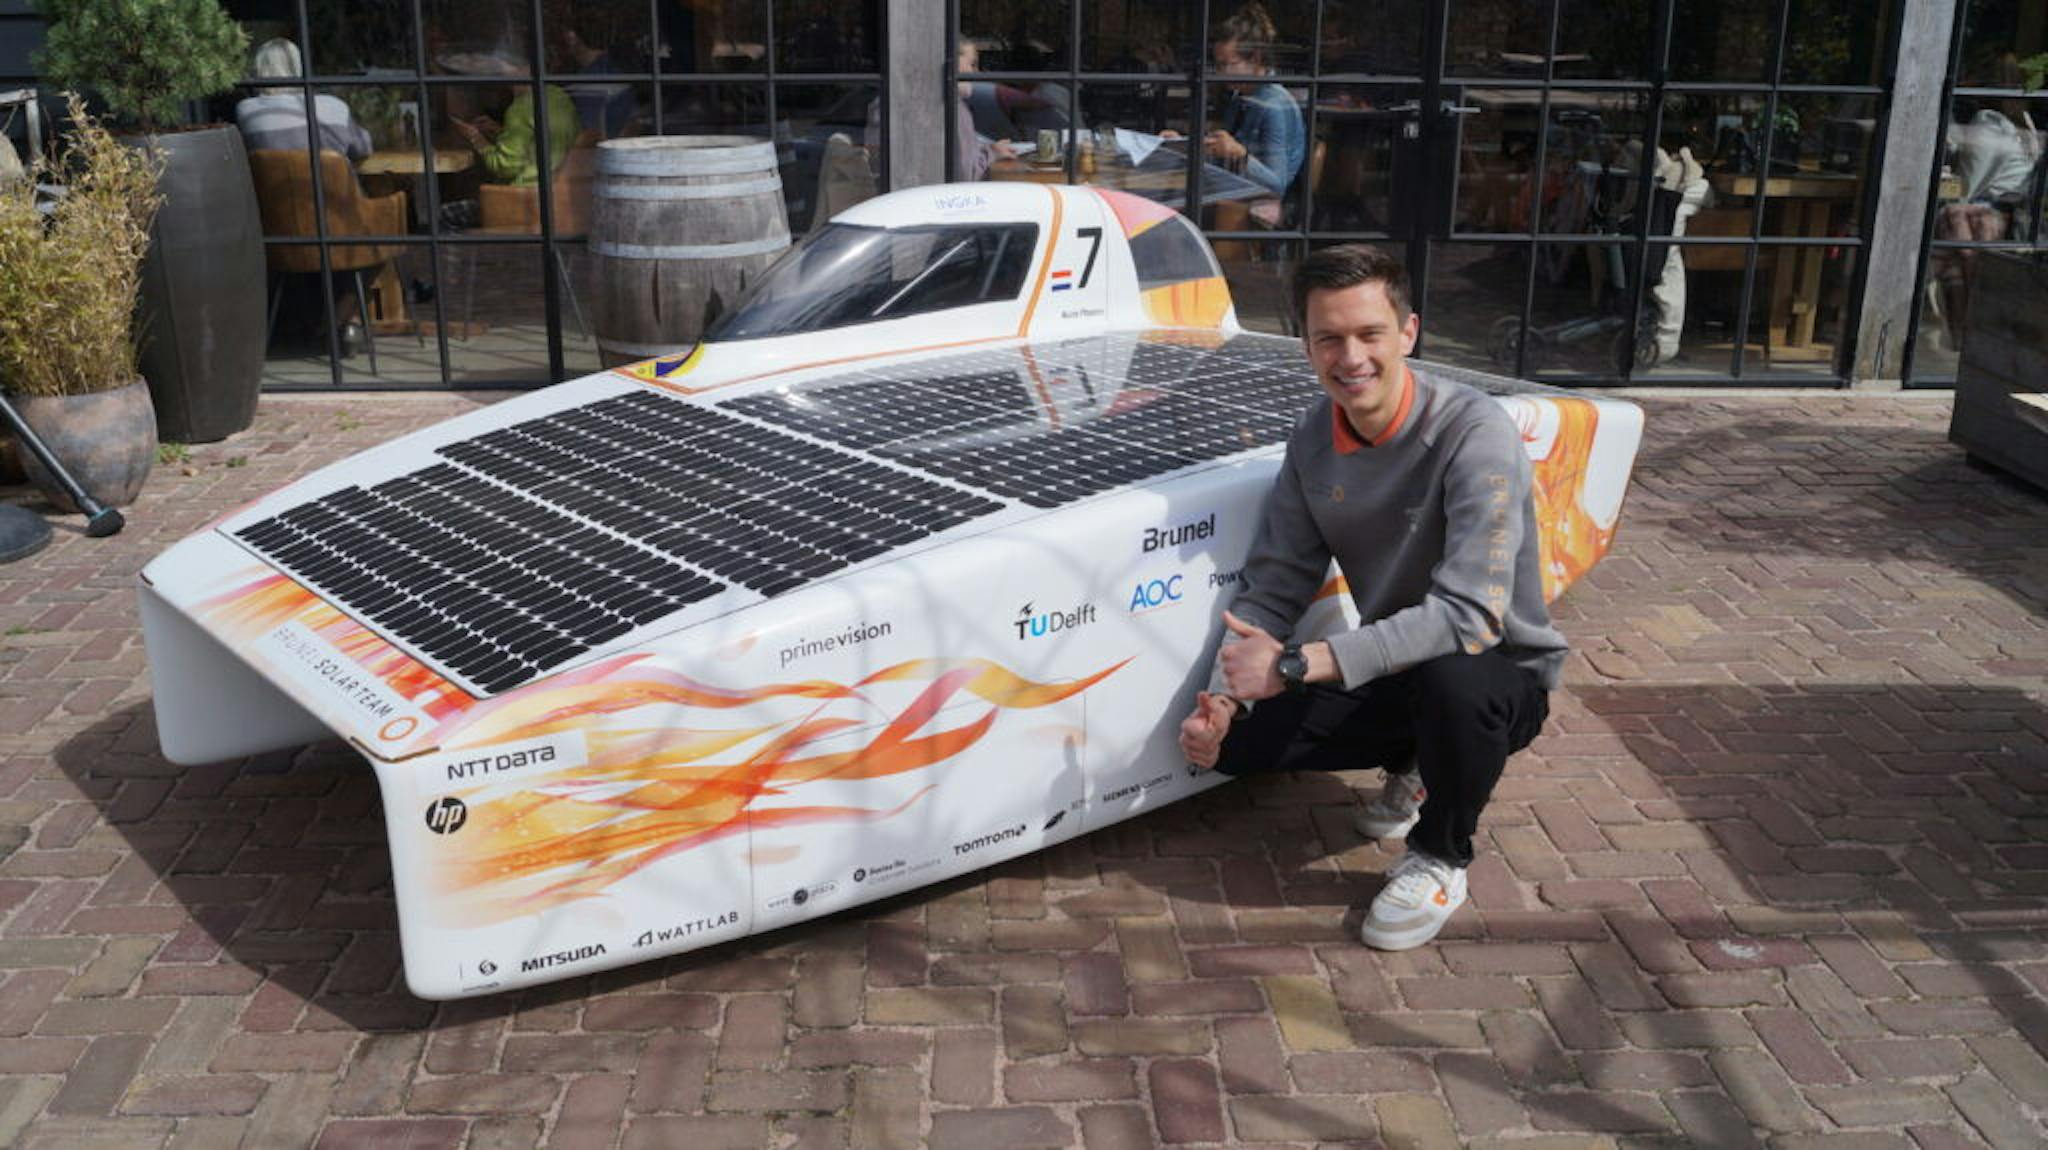 [NL] Brunel Solar Team showt zonneauto bij Ruiterhuys